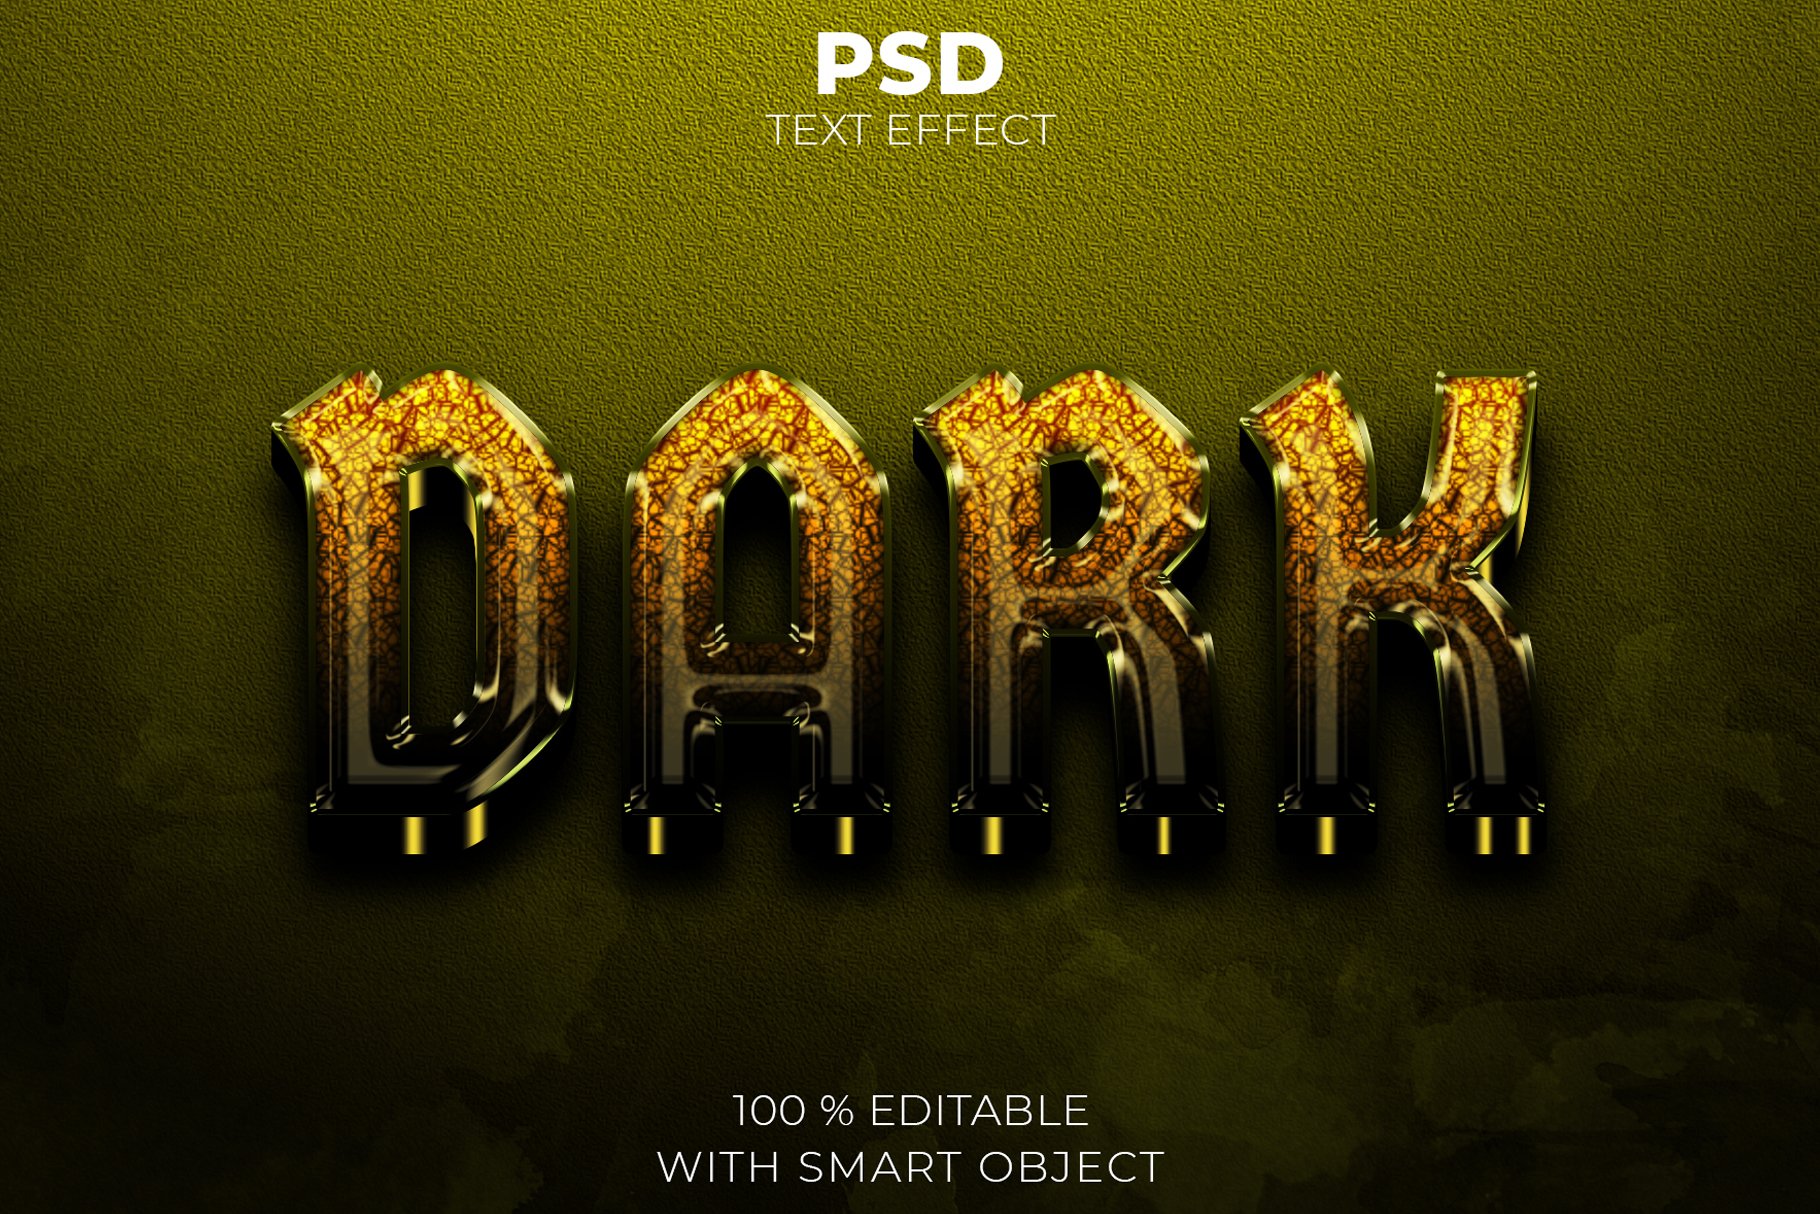 Dark 3D editable text effectcover image.